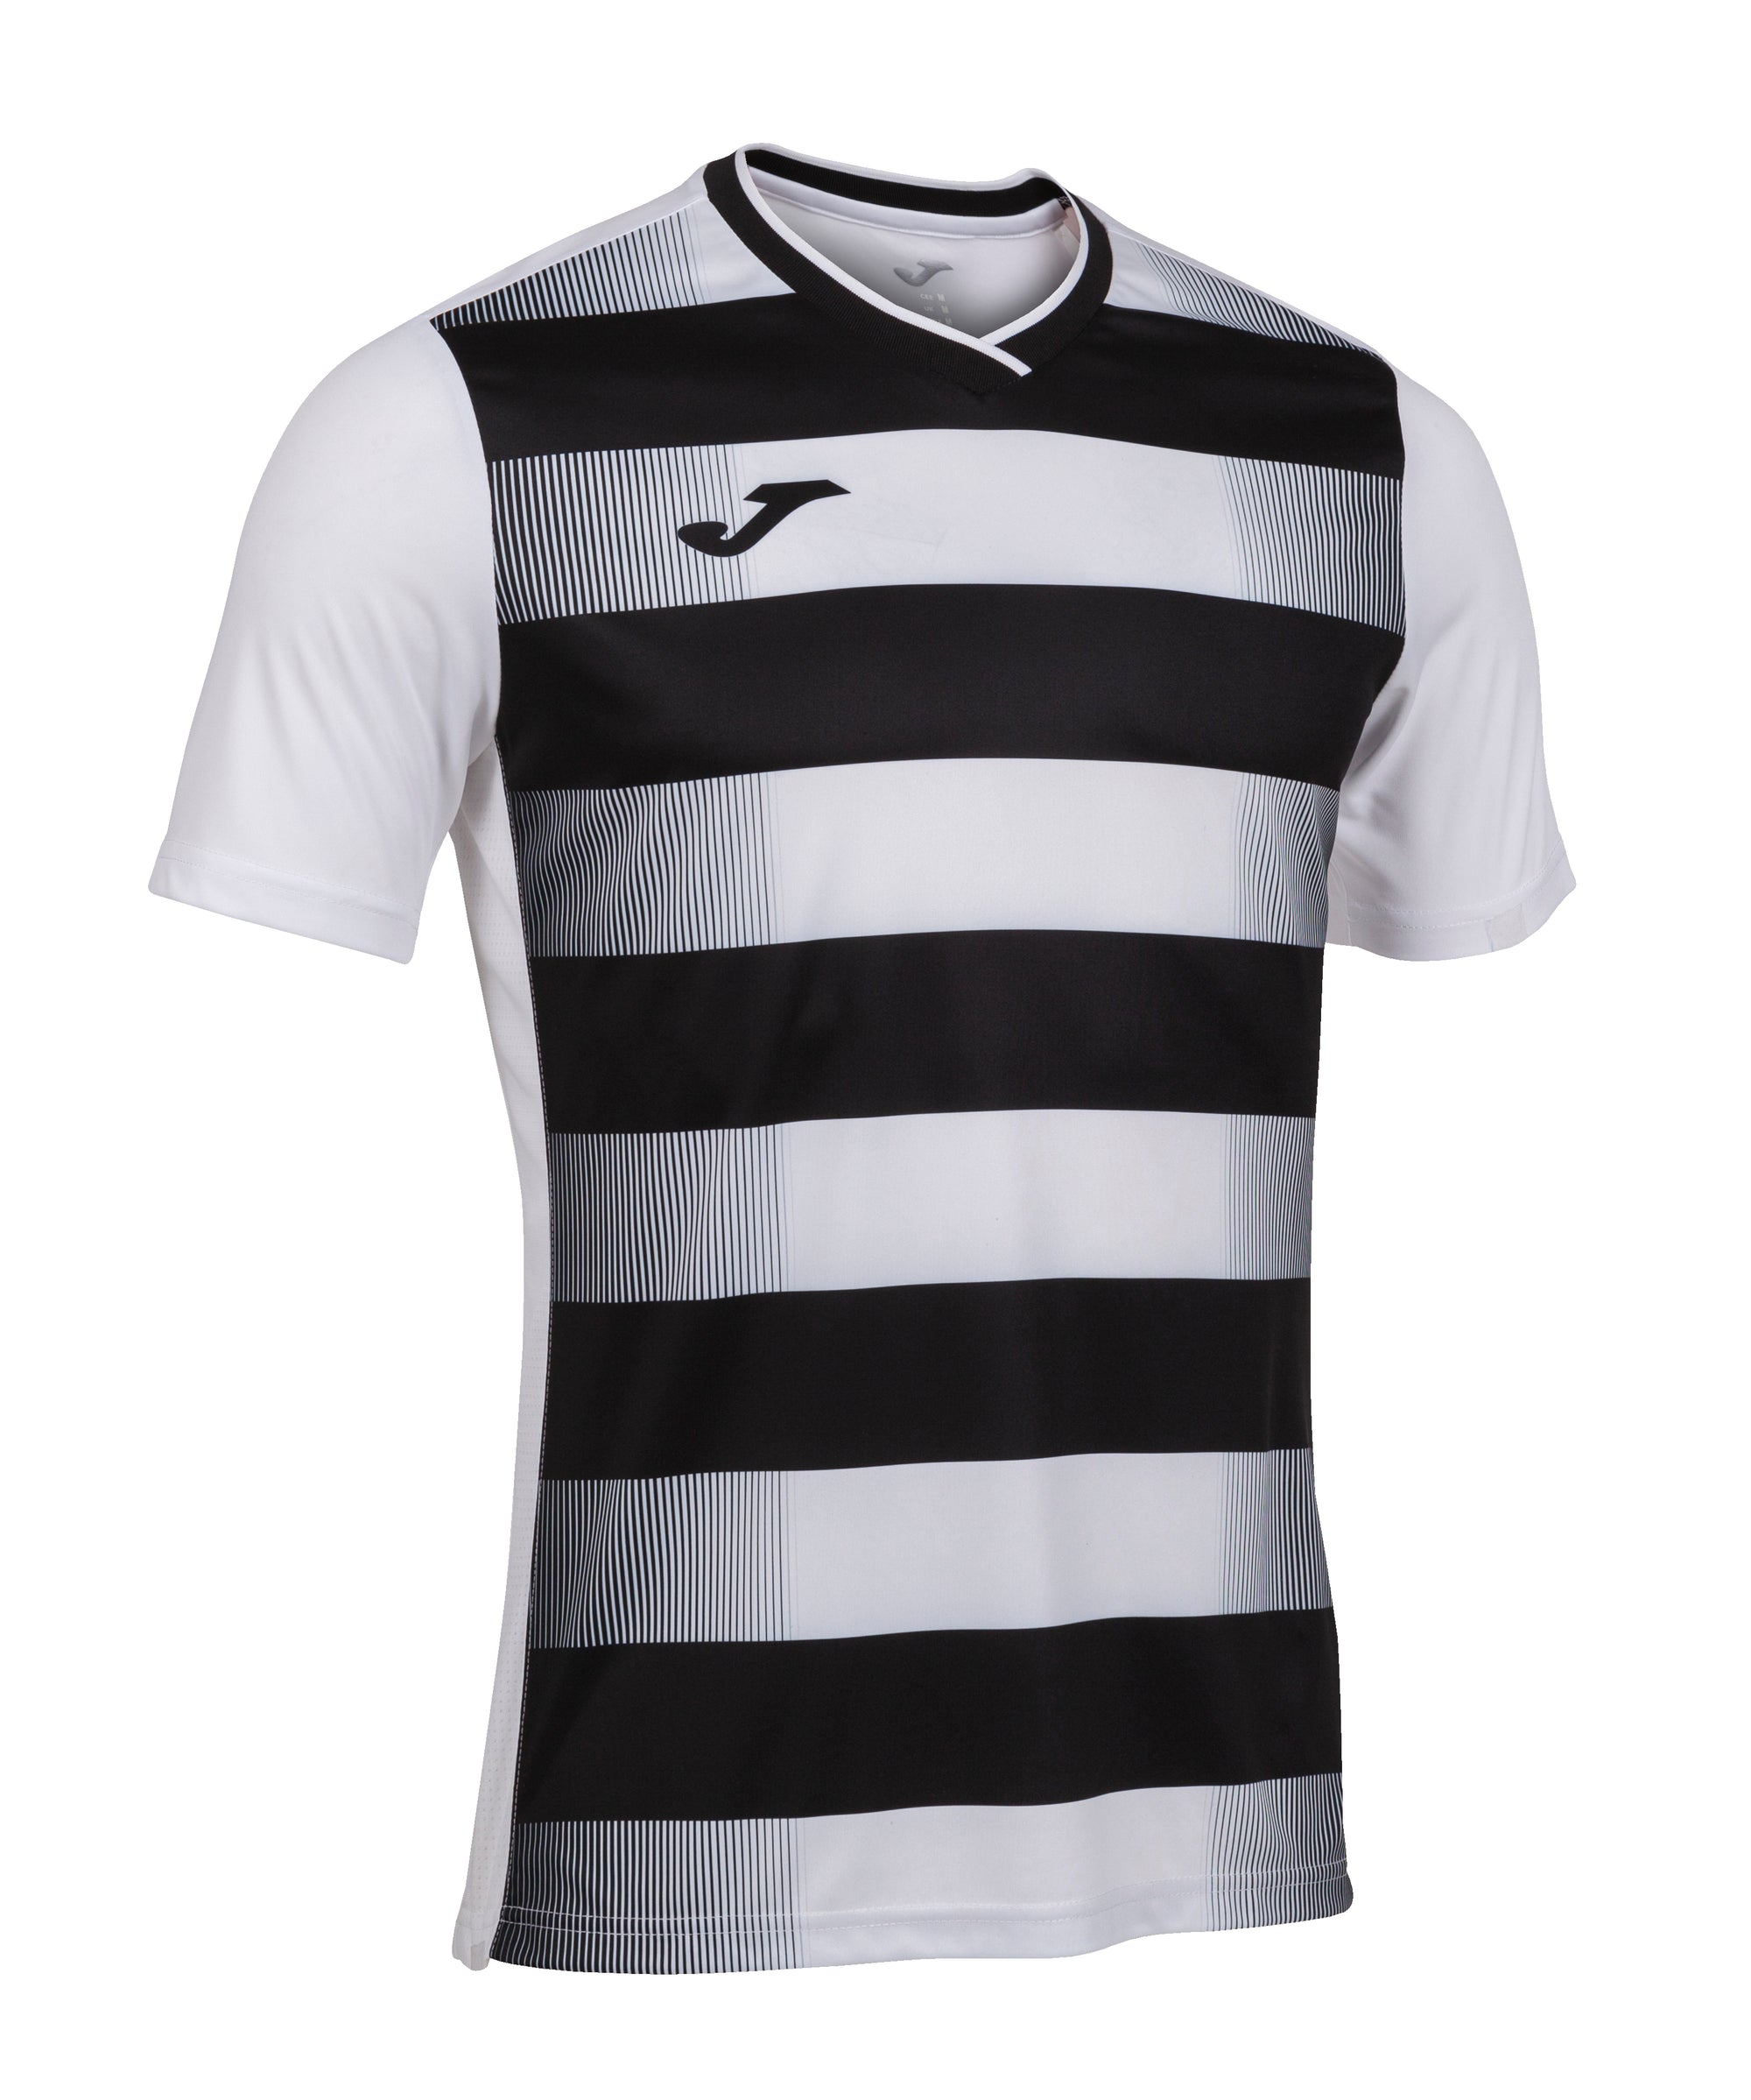 Joma Europa V Short Sleeve T-Shirt - White/Black